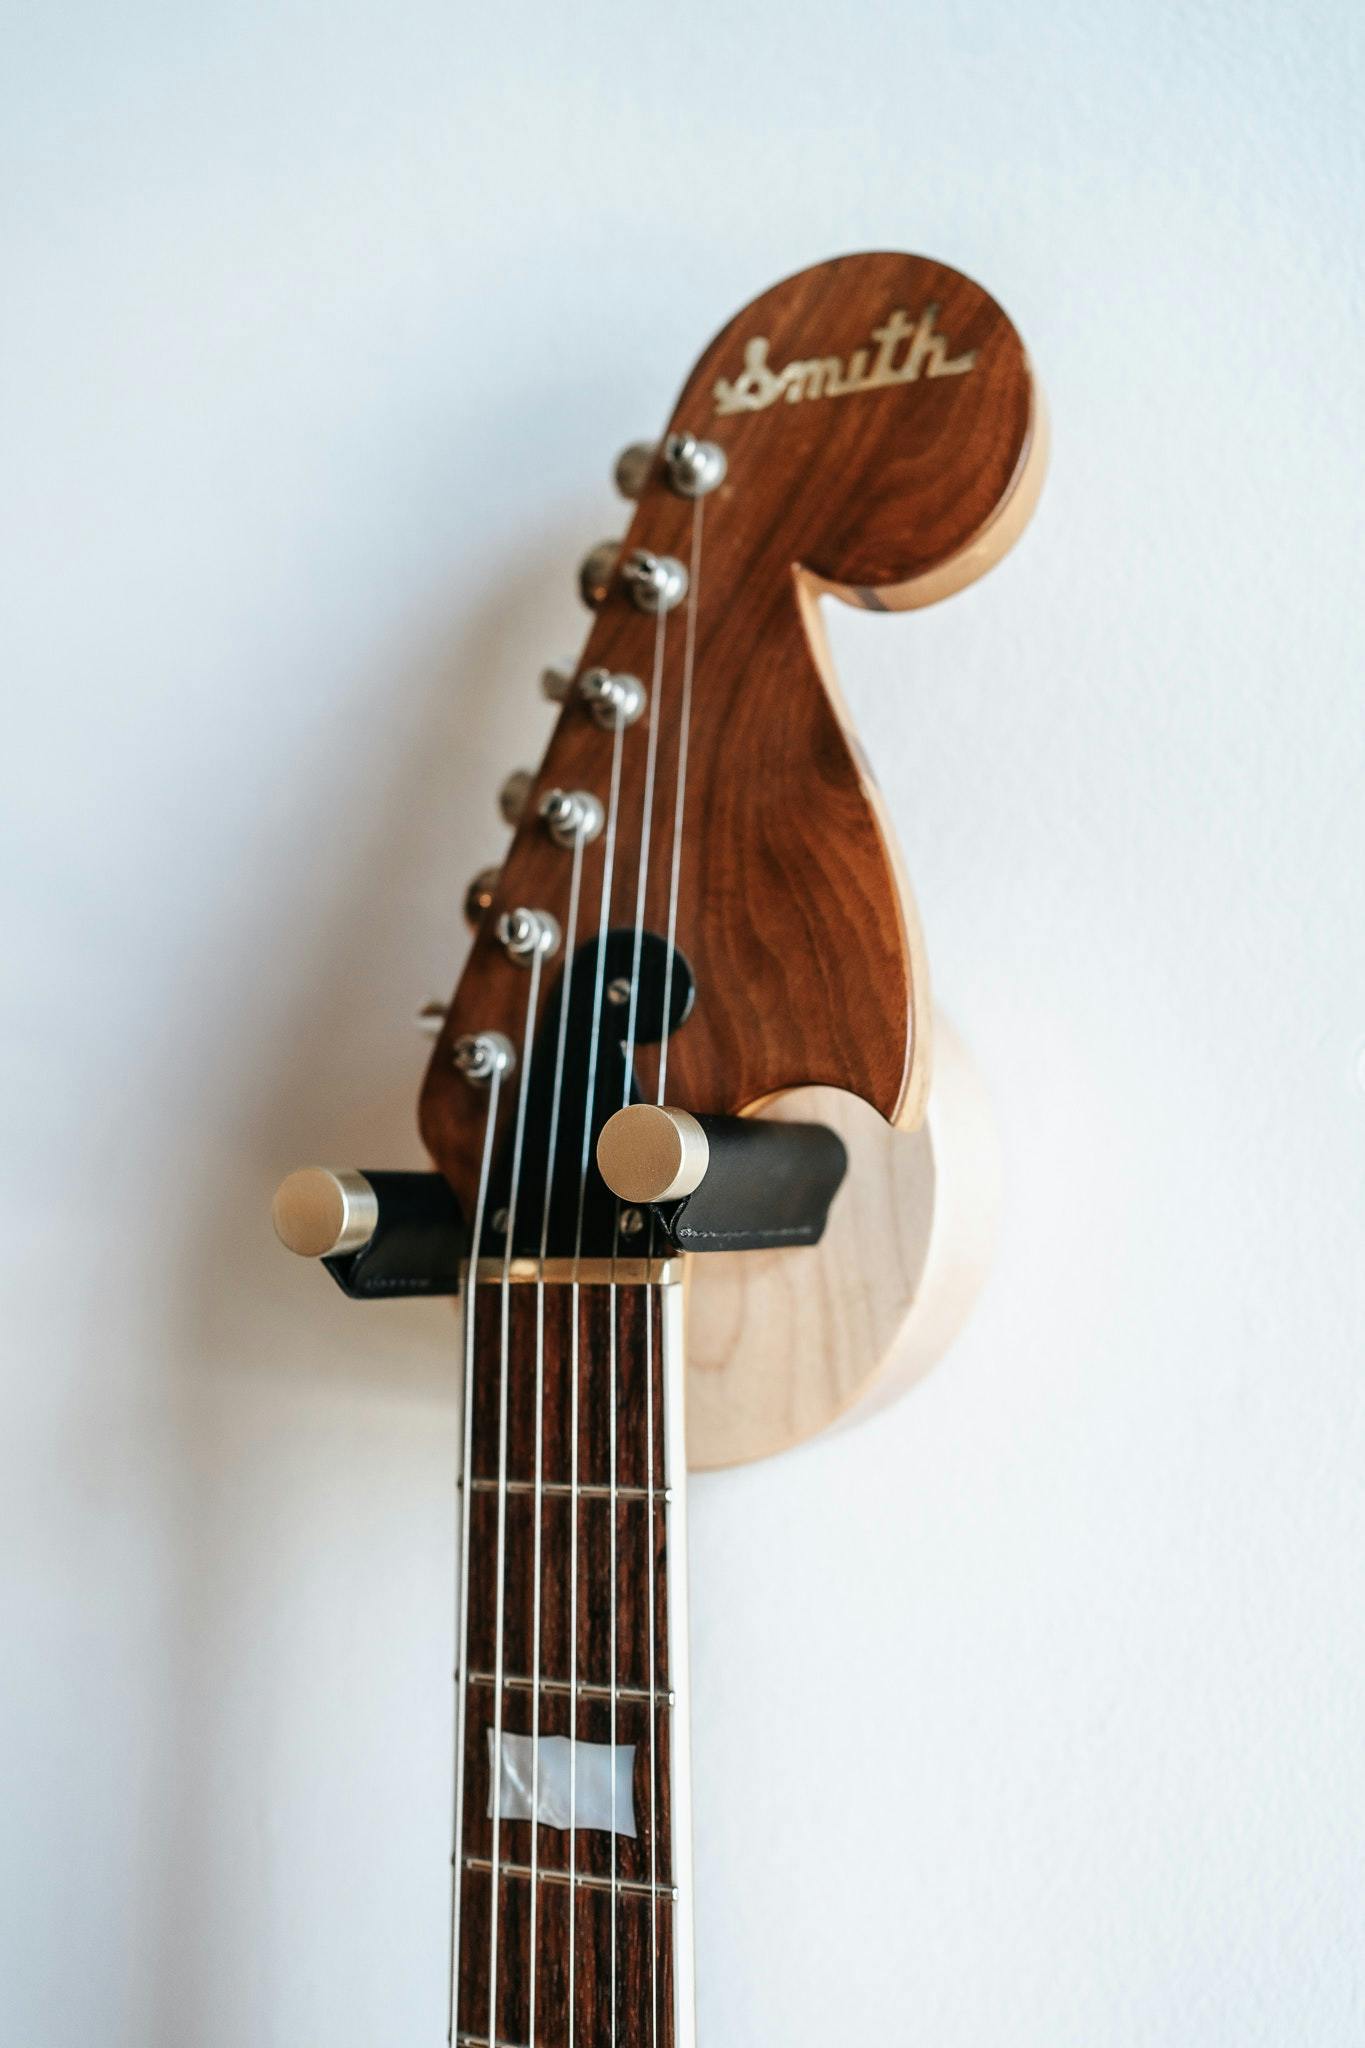 tk smith maple telecaster guitar wall hanger